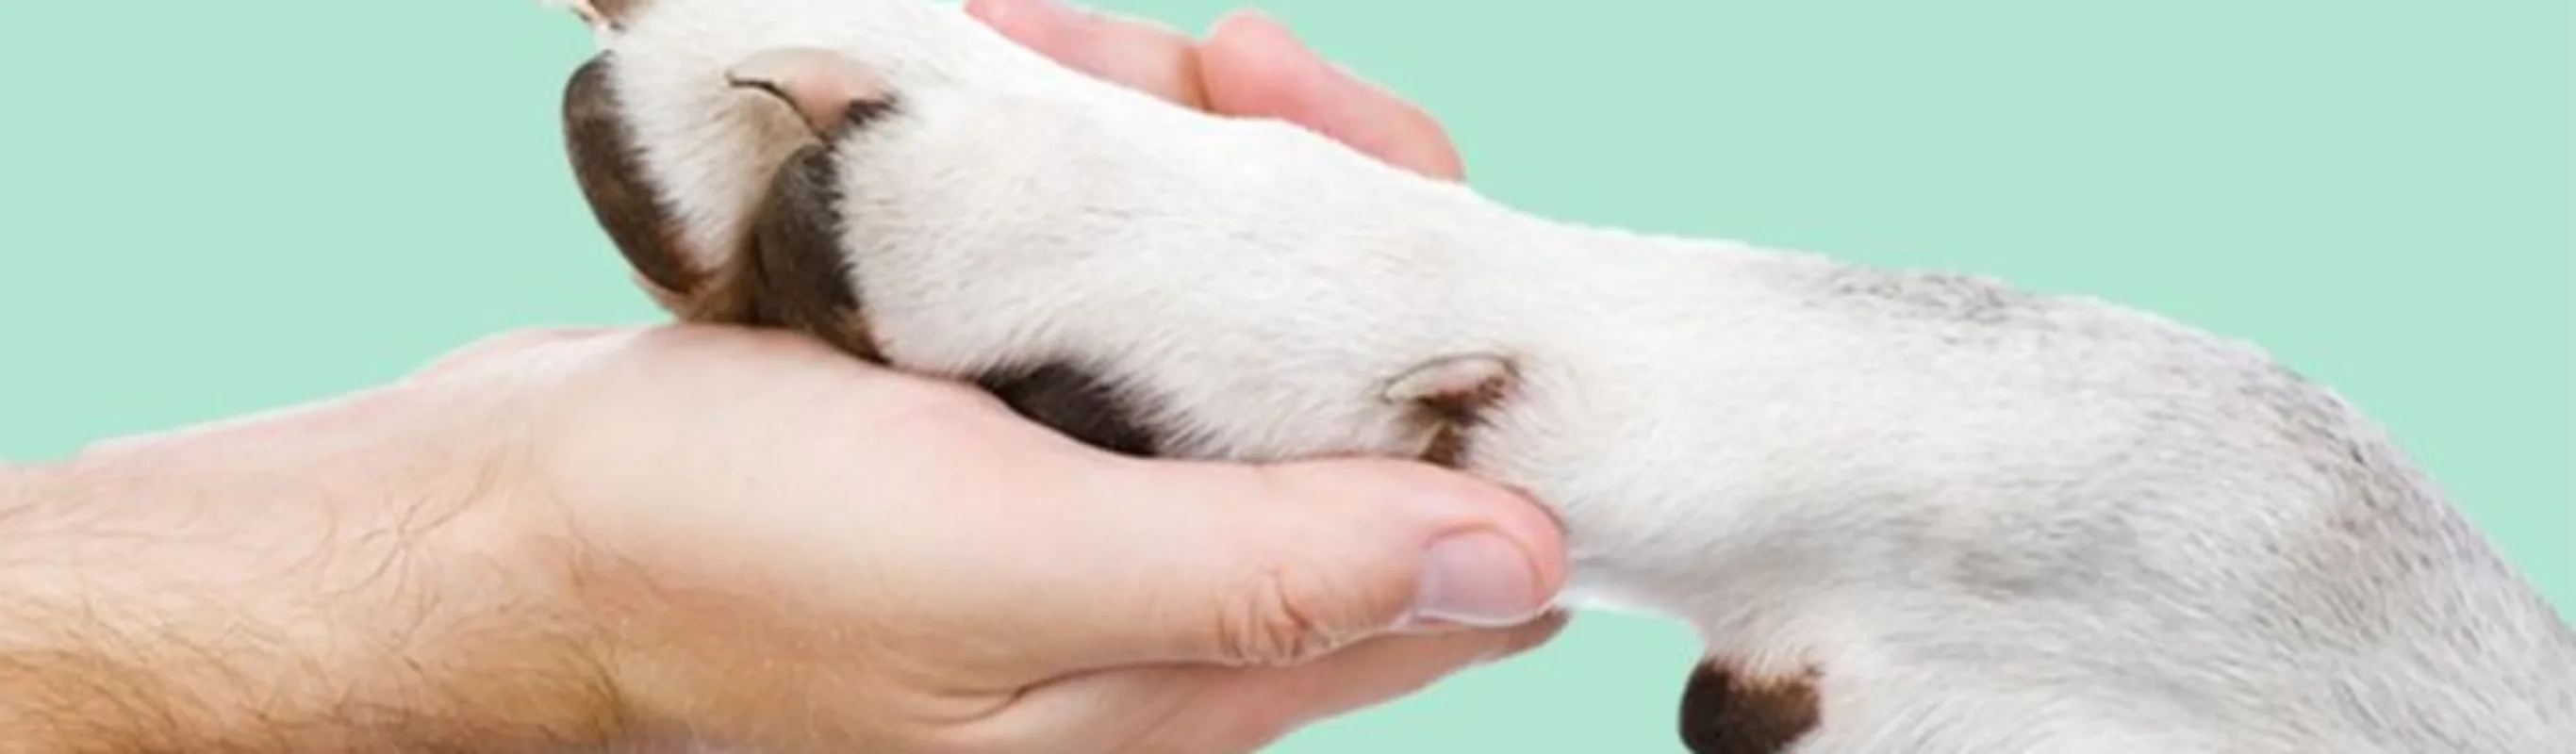 Human hand holding a dog paw